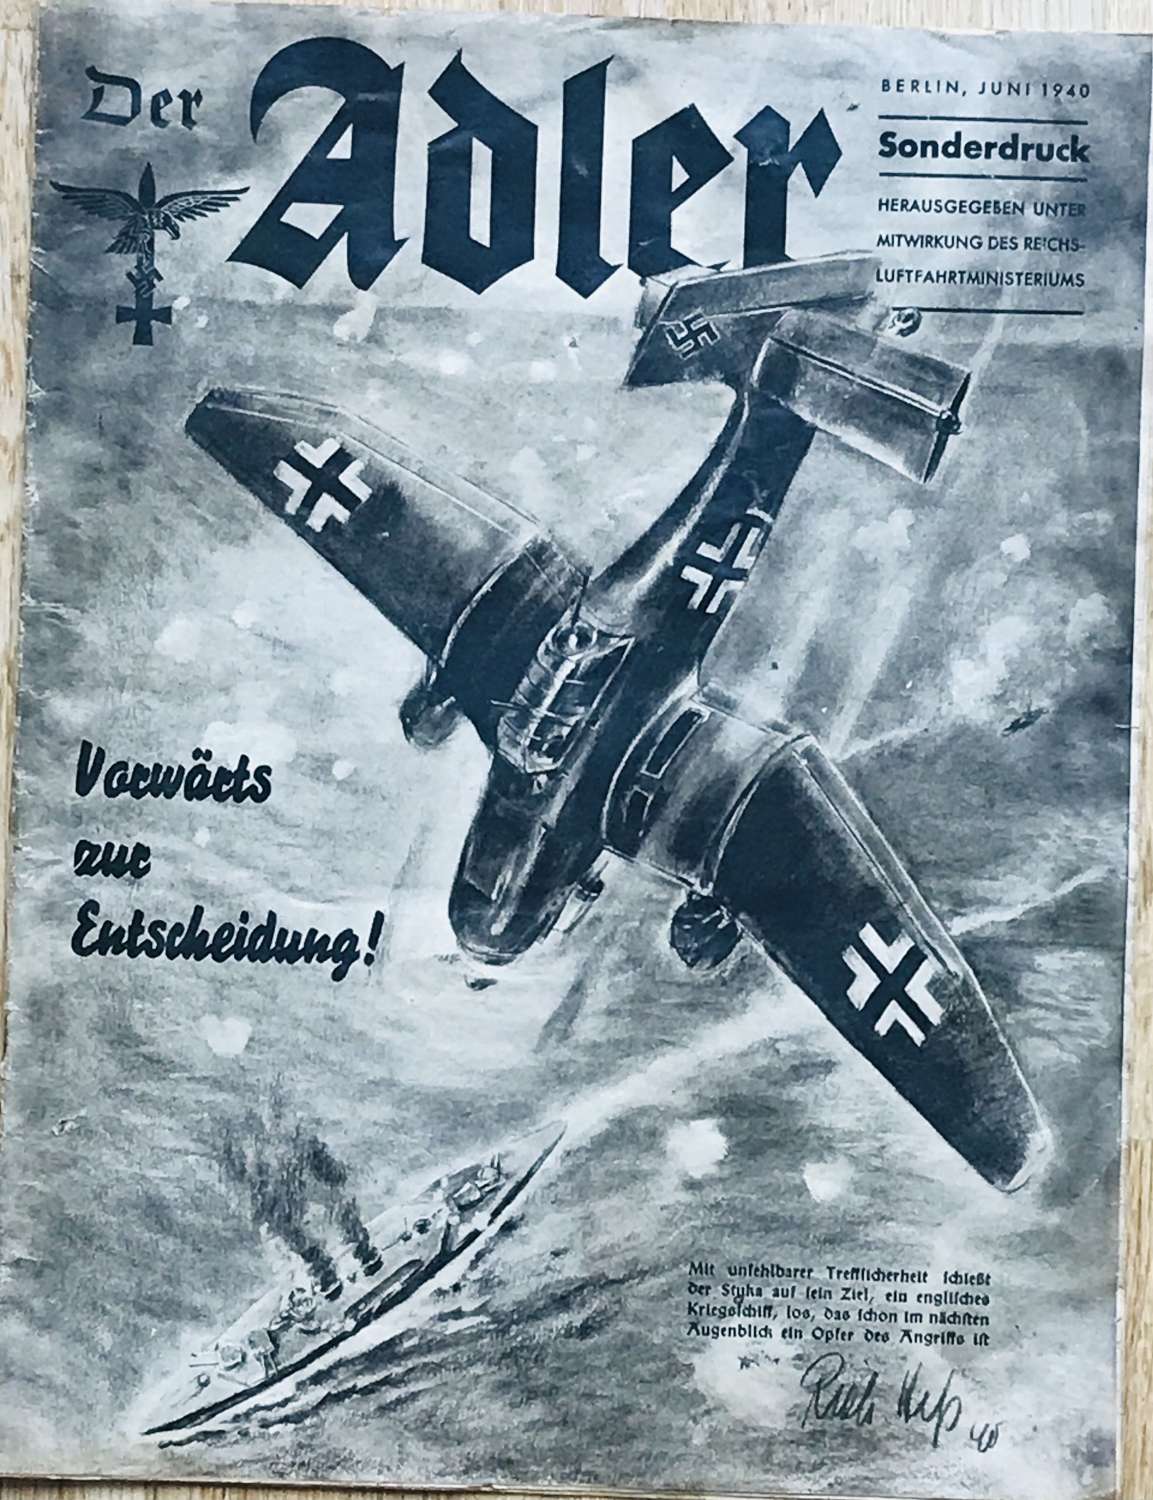 Alder magazine, dated, June 1940